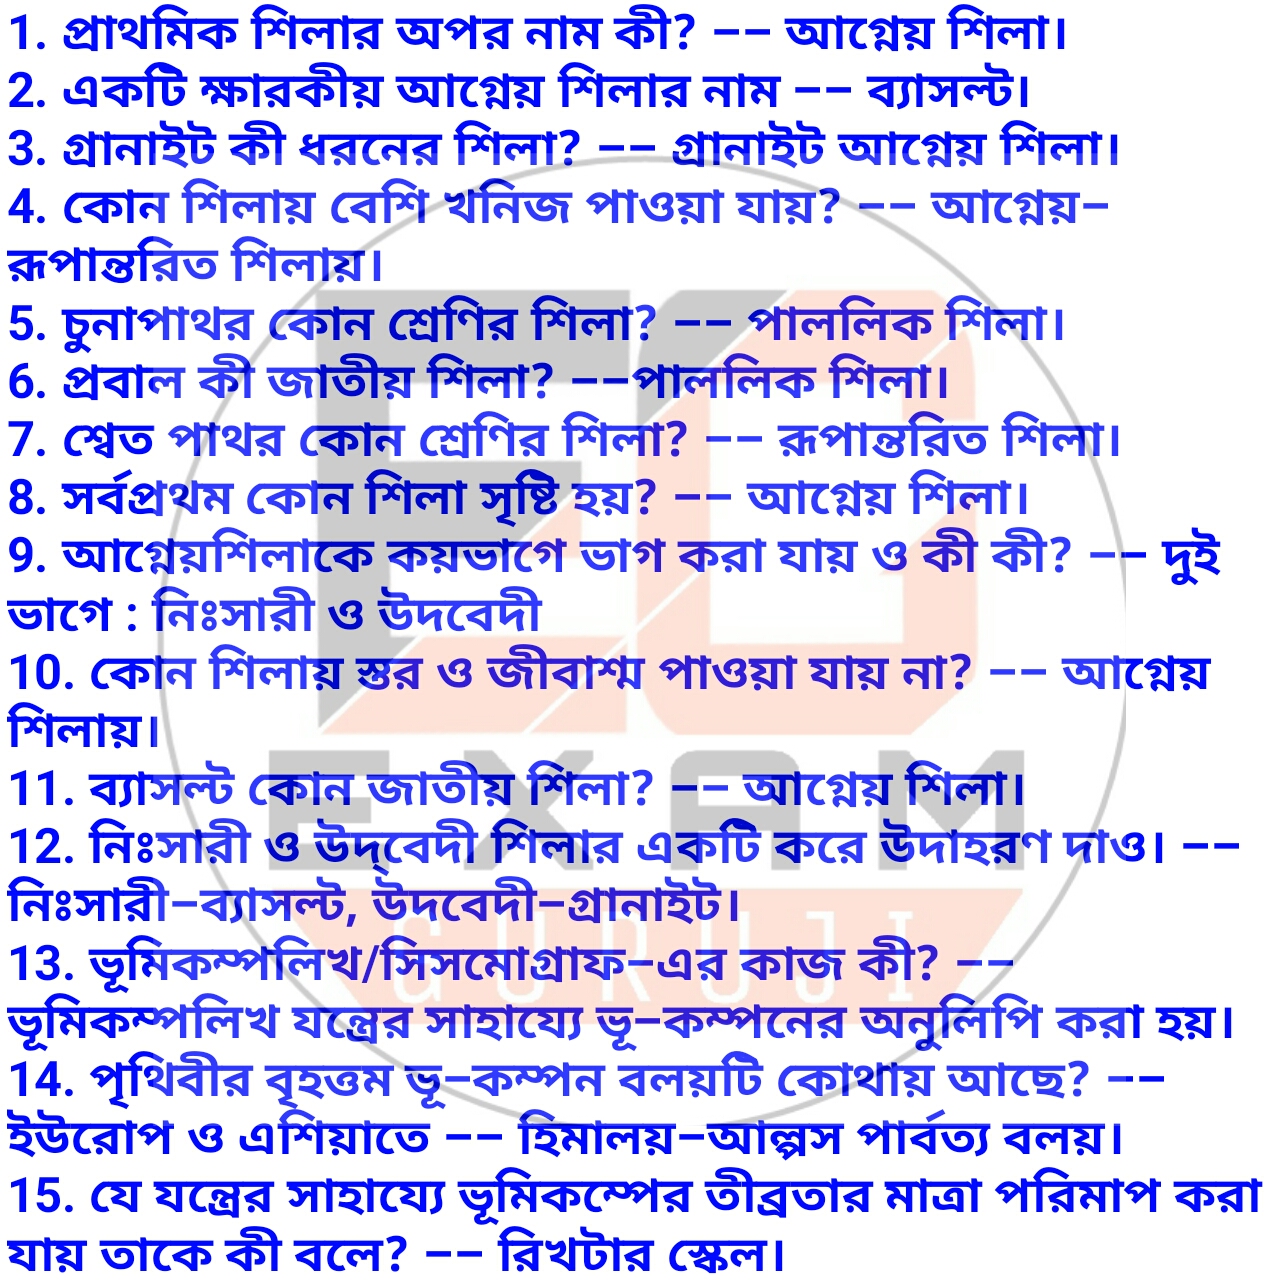 bengali books download pdf